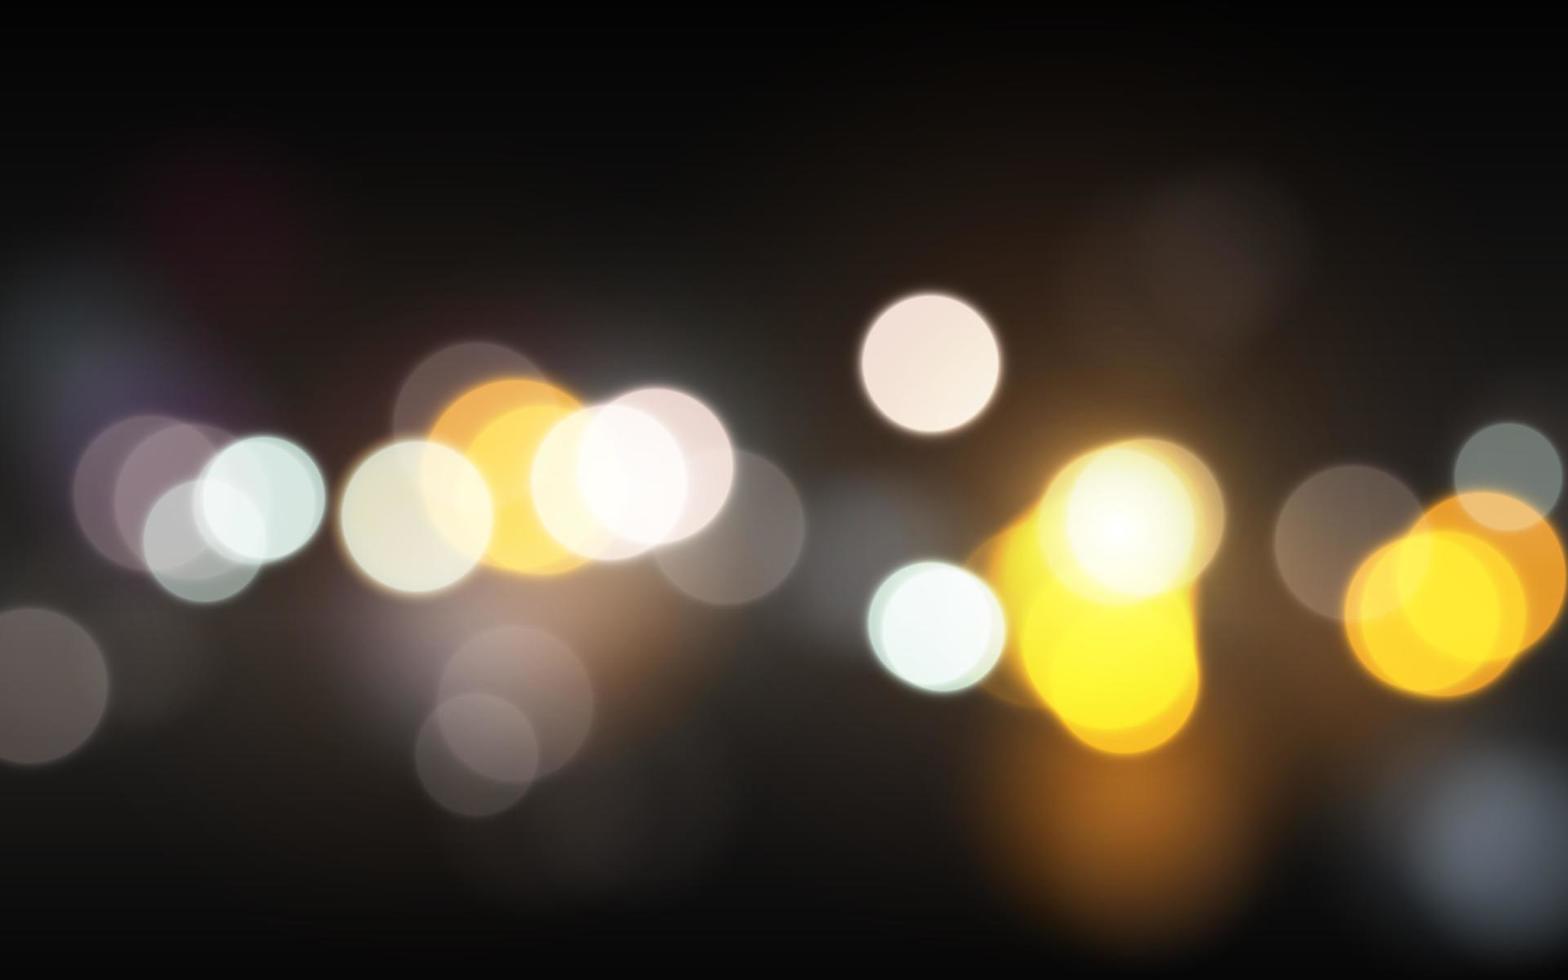 stad lichten Bij nacht bokeh zacht licht abstract achtergrond, vector eps 10 illustratie bokeh deeltjes, achtergrond decoratie